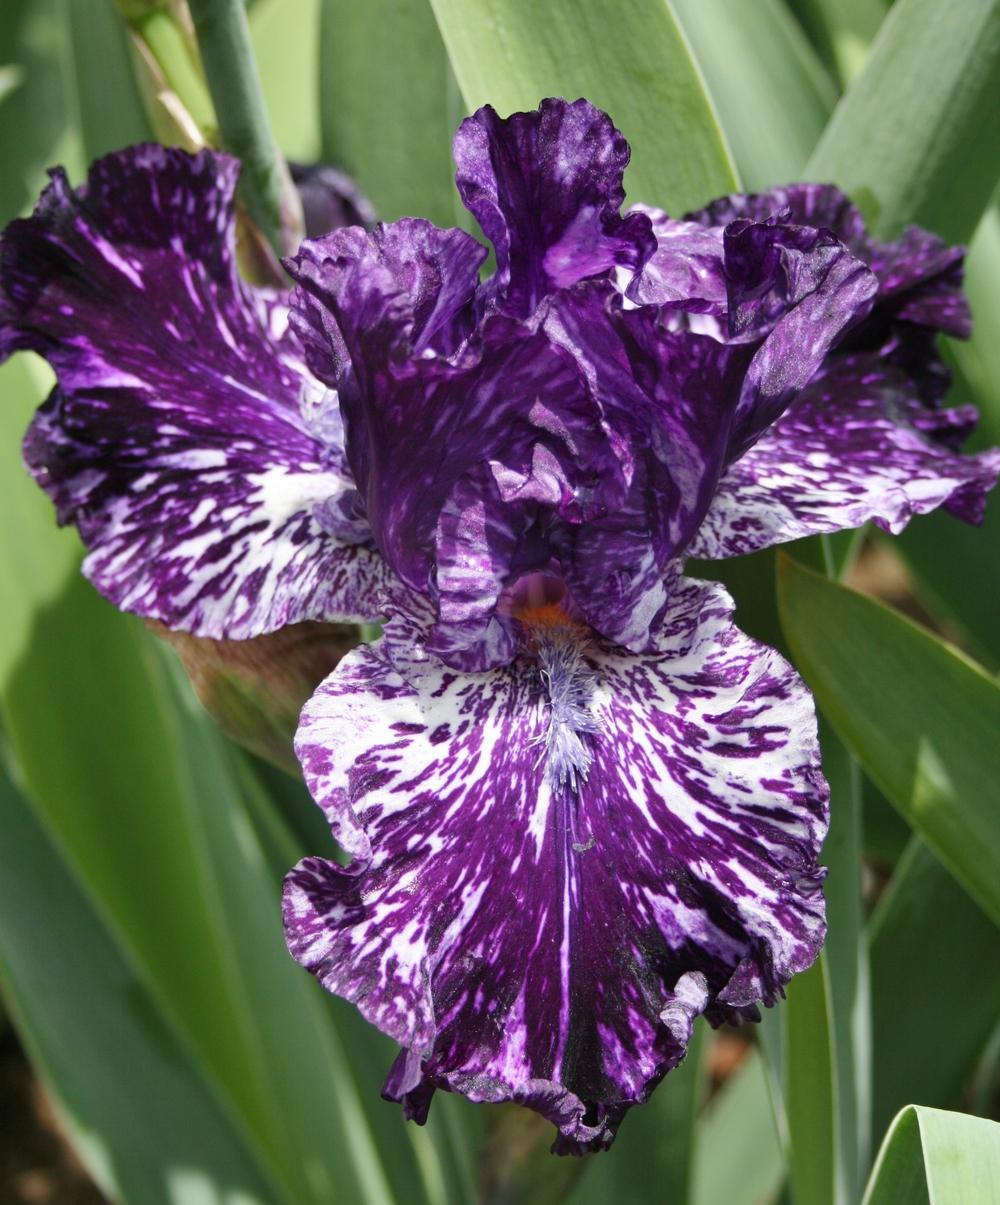 Photo of Tall Bearded Iris (Iris 'Splatter Matters') uploaded by Calif_Sue